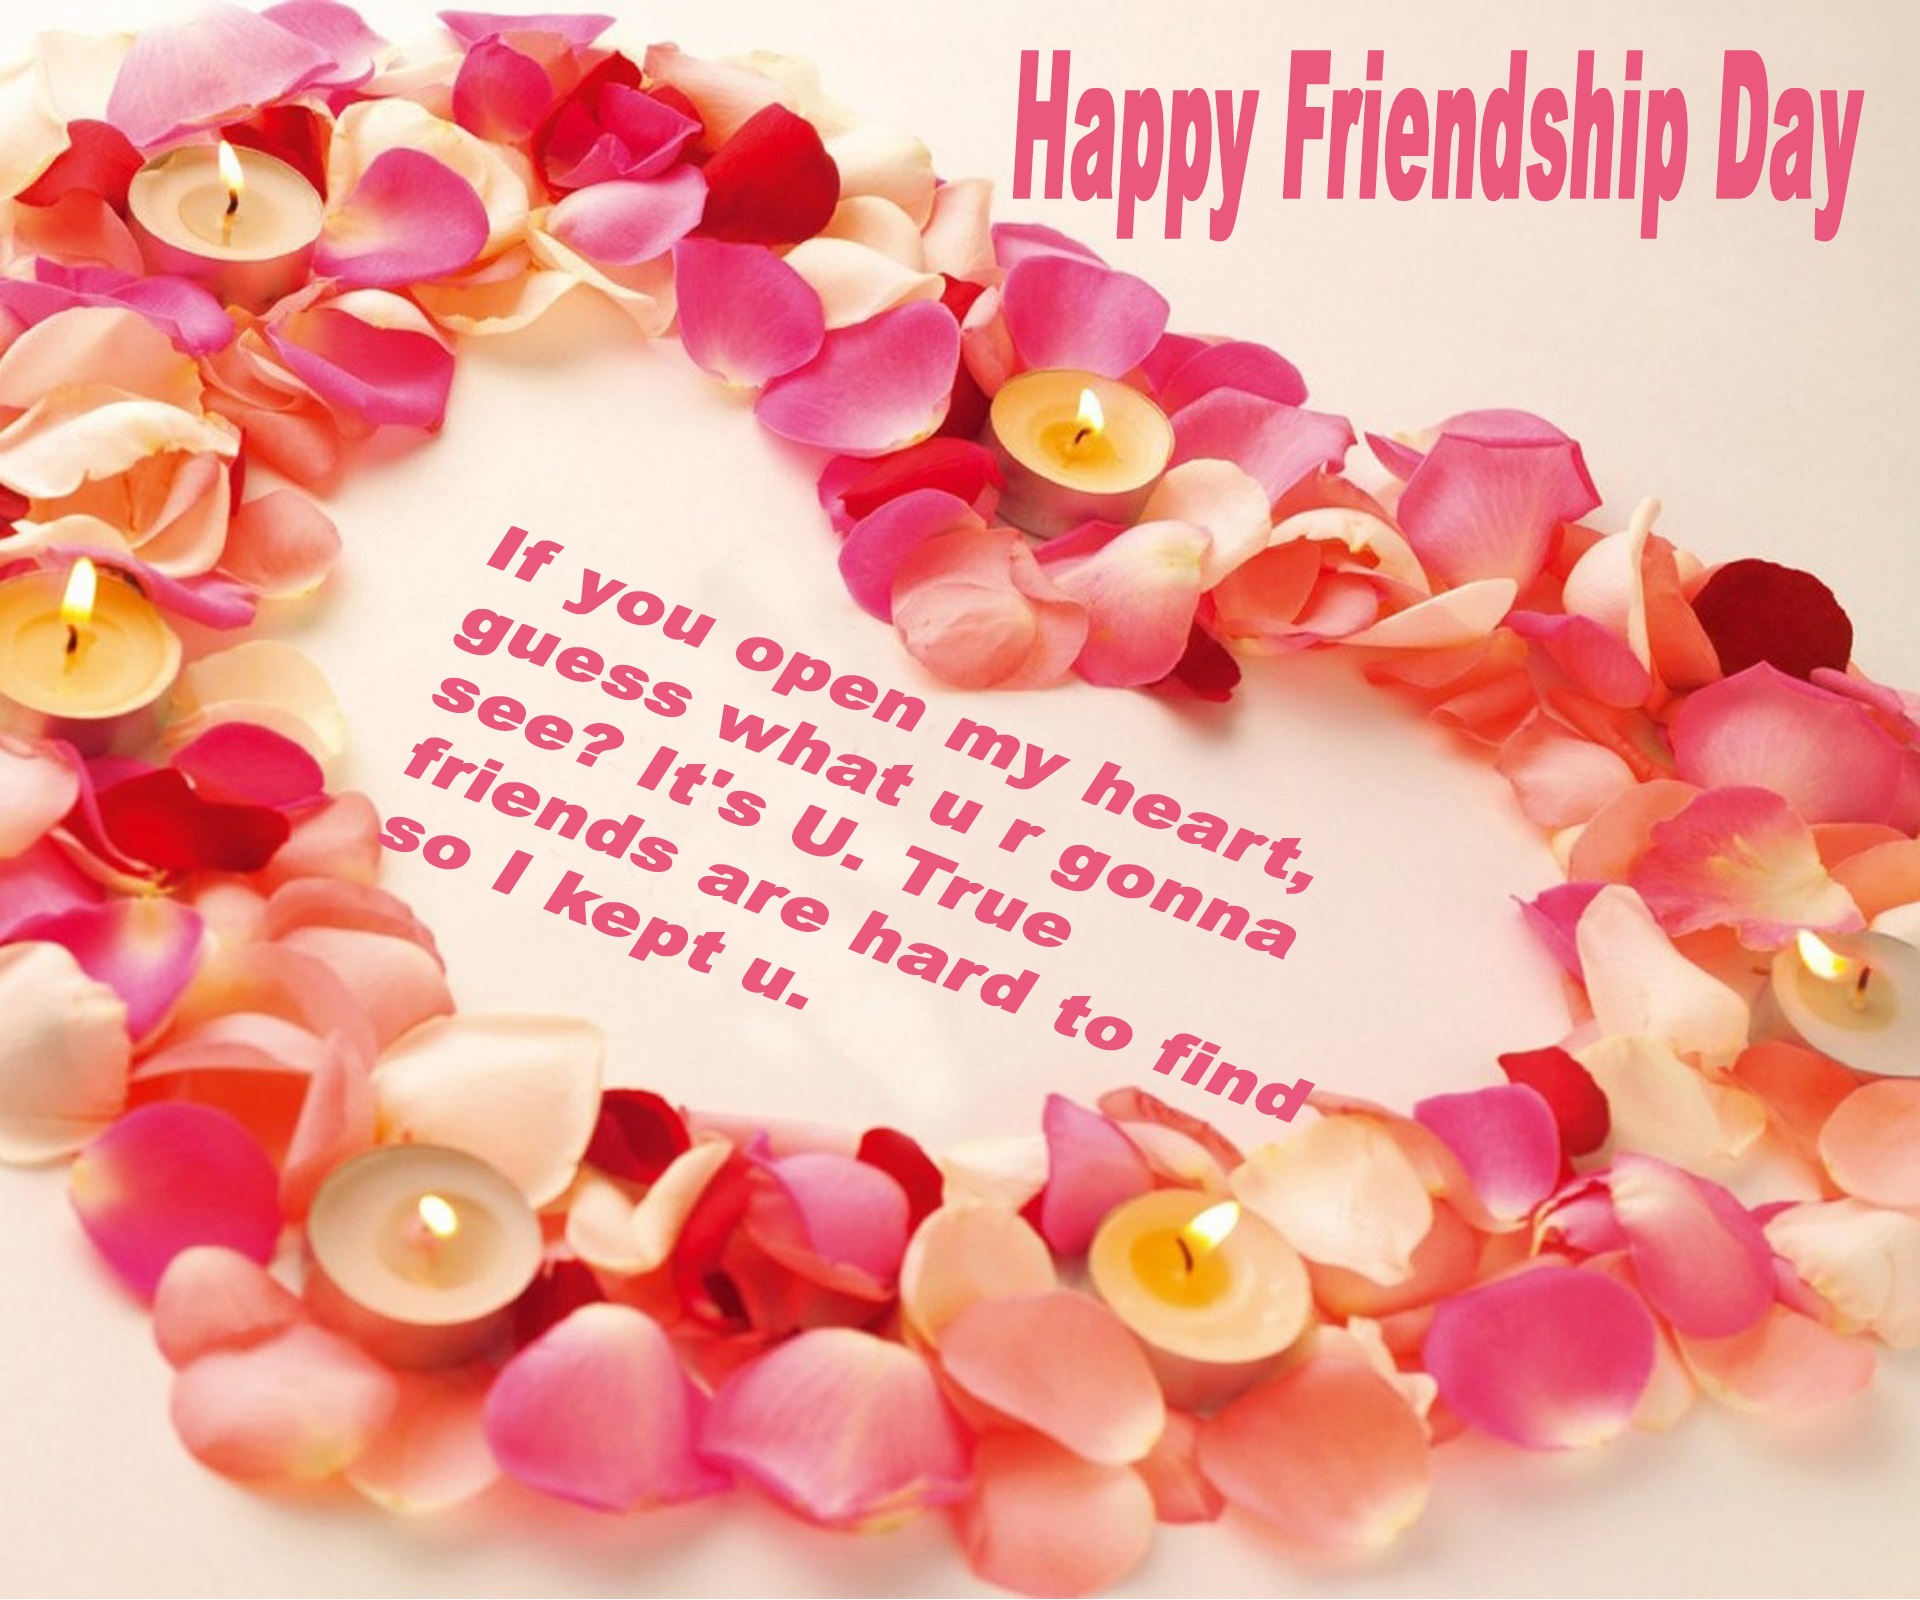  Happy Friendship Day Images Download Download free  Images SRkh